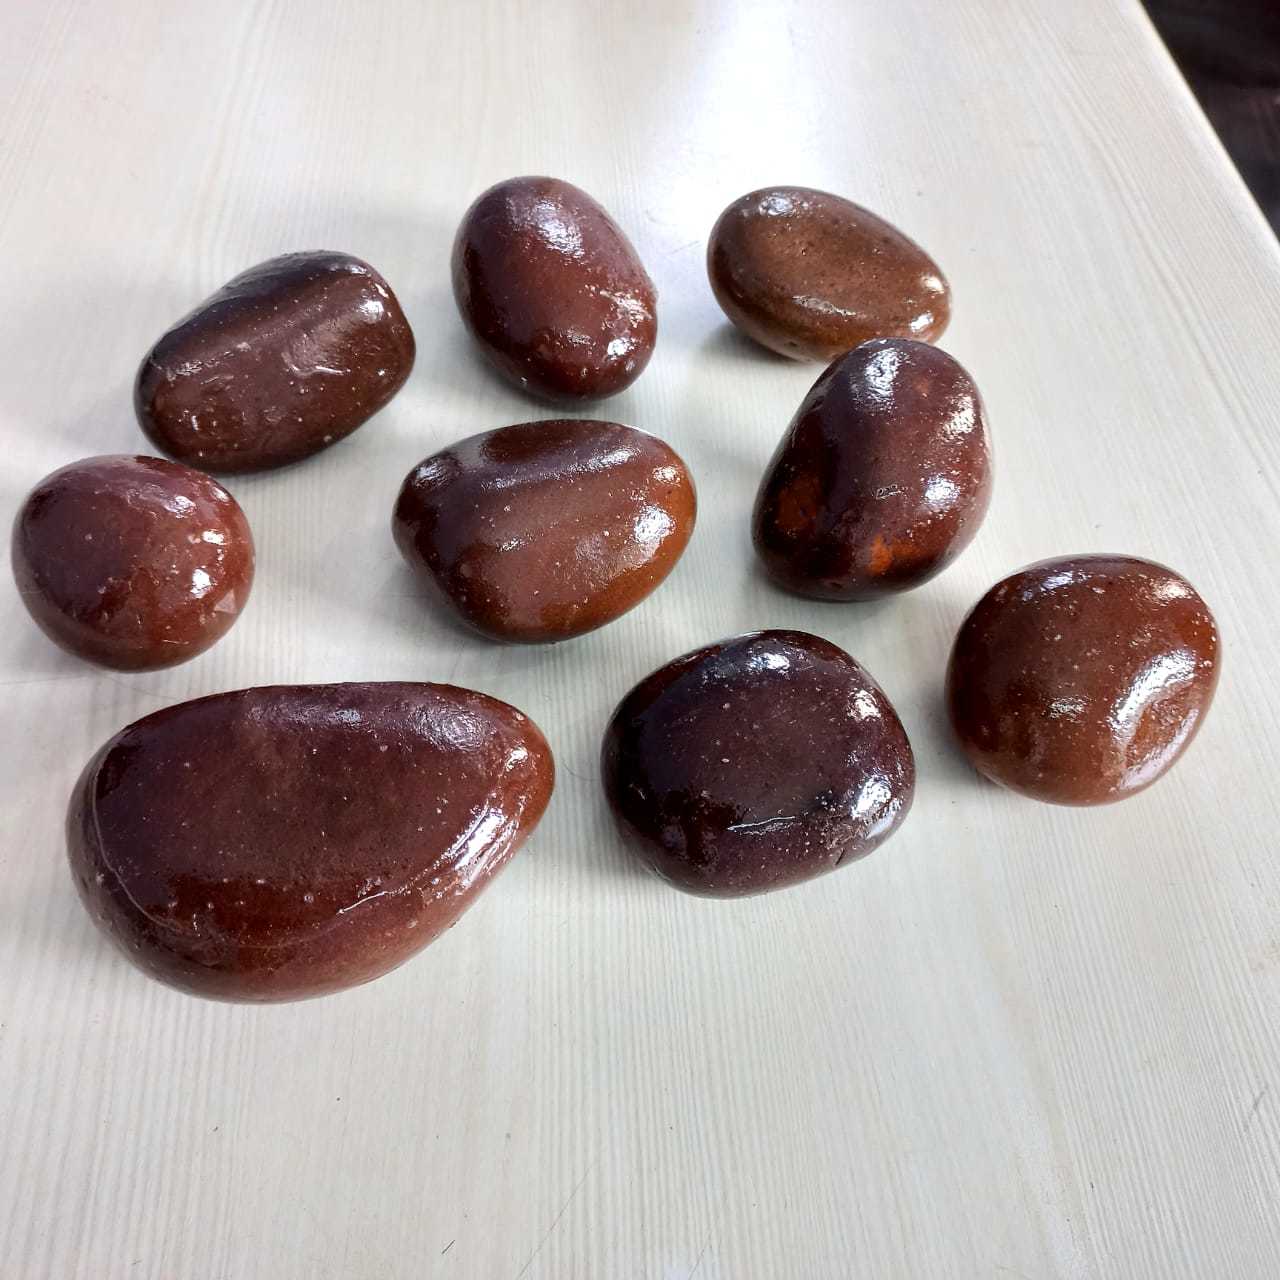 Manufacturer of good Polished Jet Black normal Polish Pebbles stone for export in bulk quantity